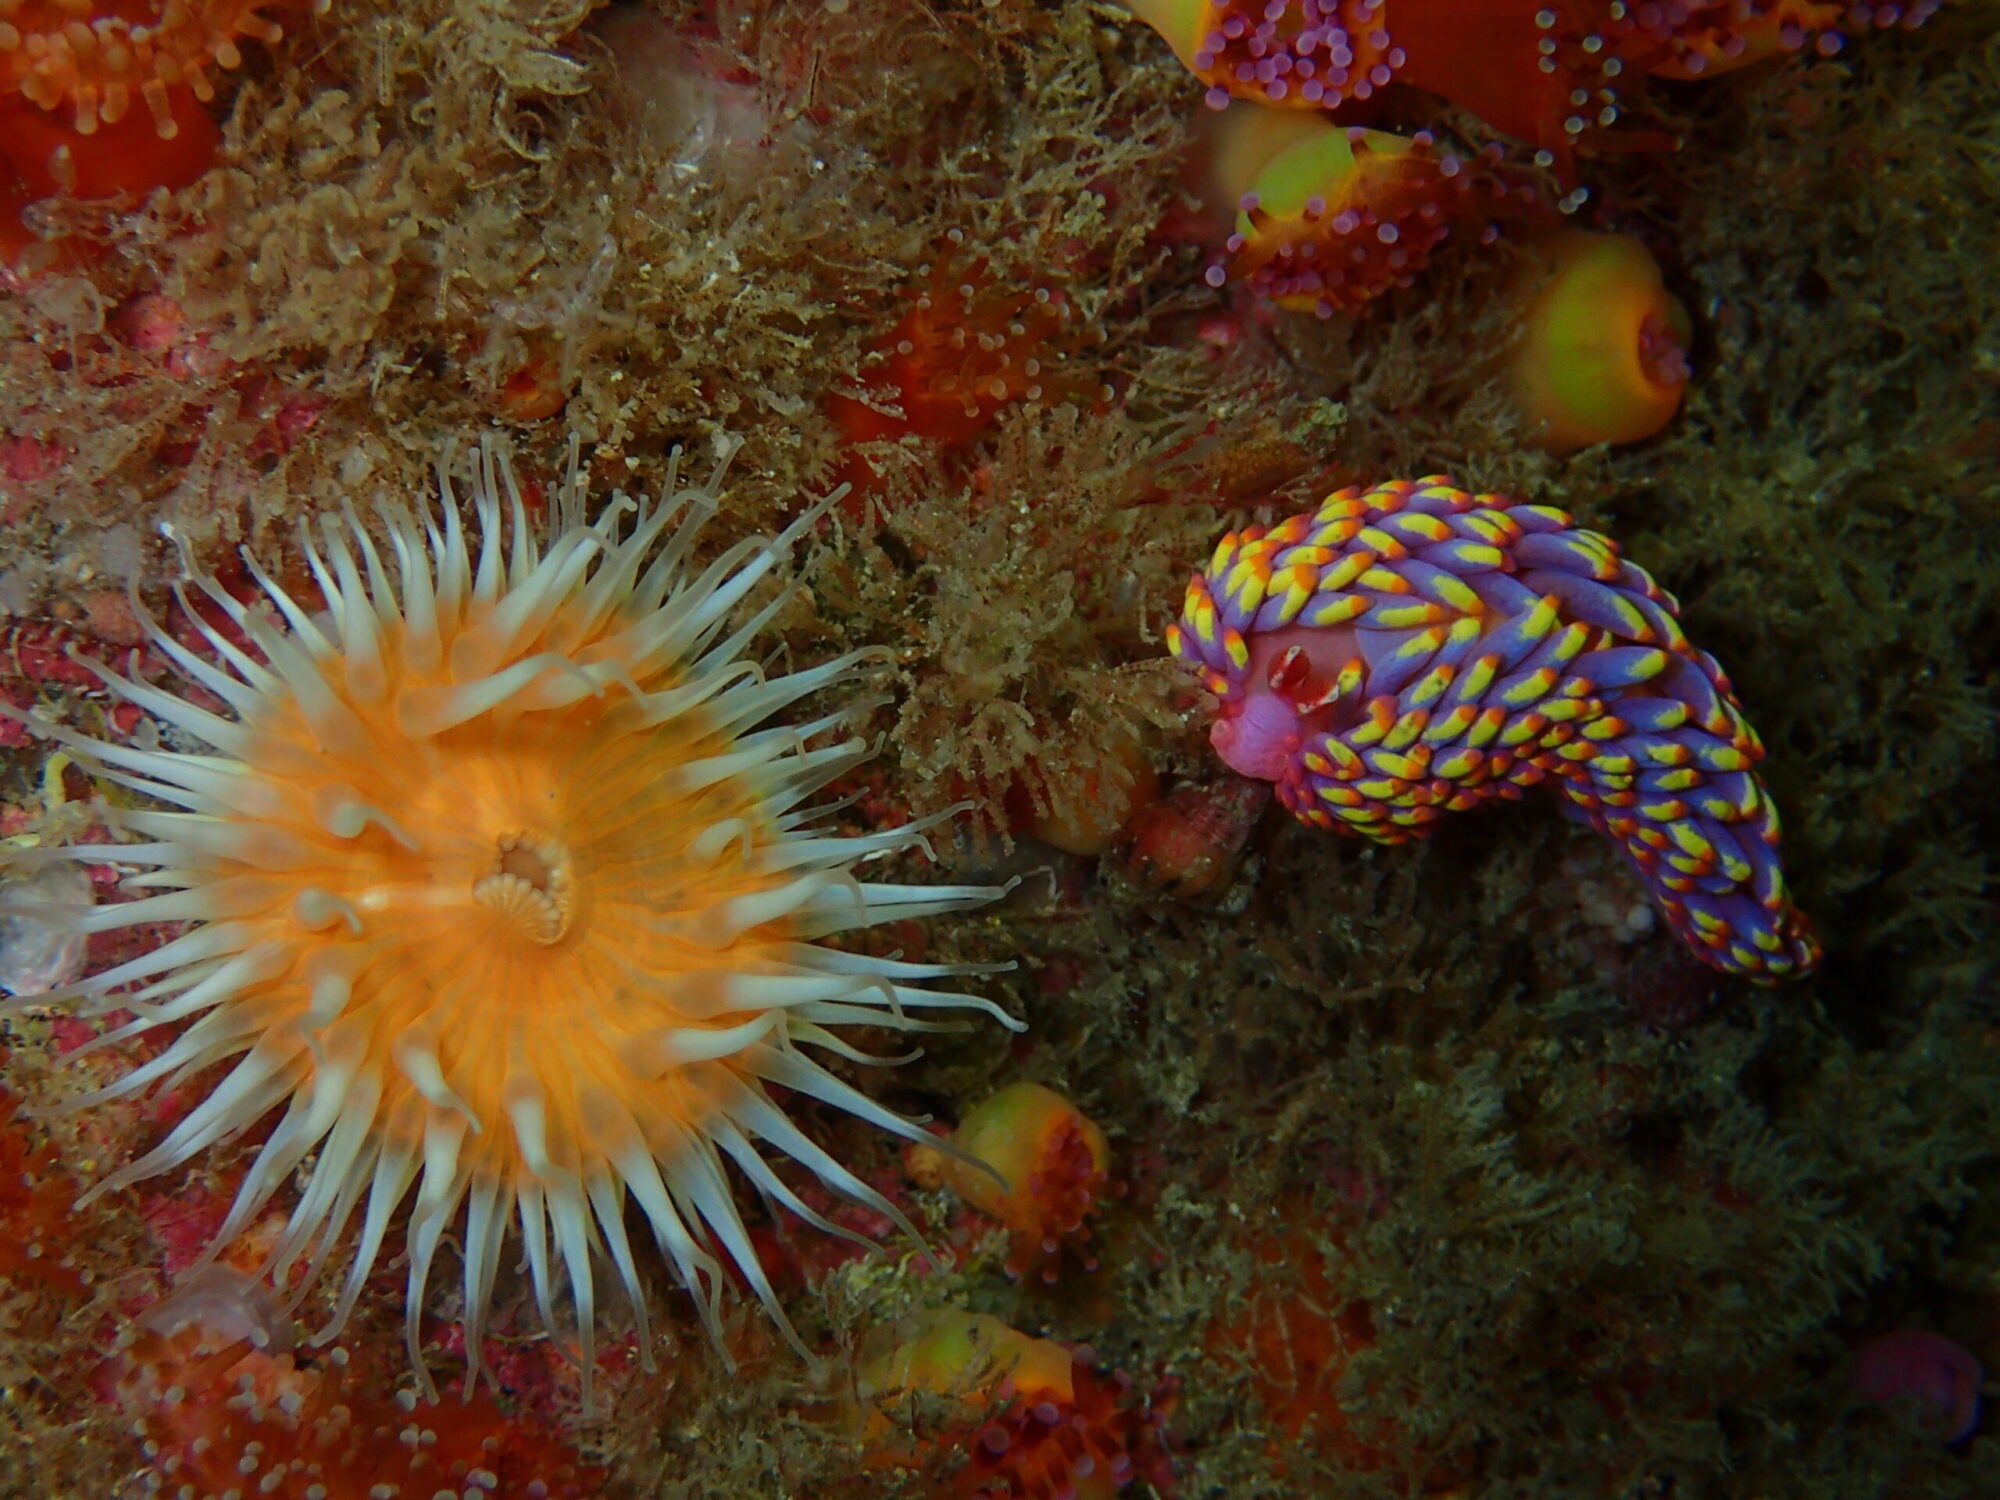 Multicolored sea slug discovered close to UK for the primary time